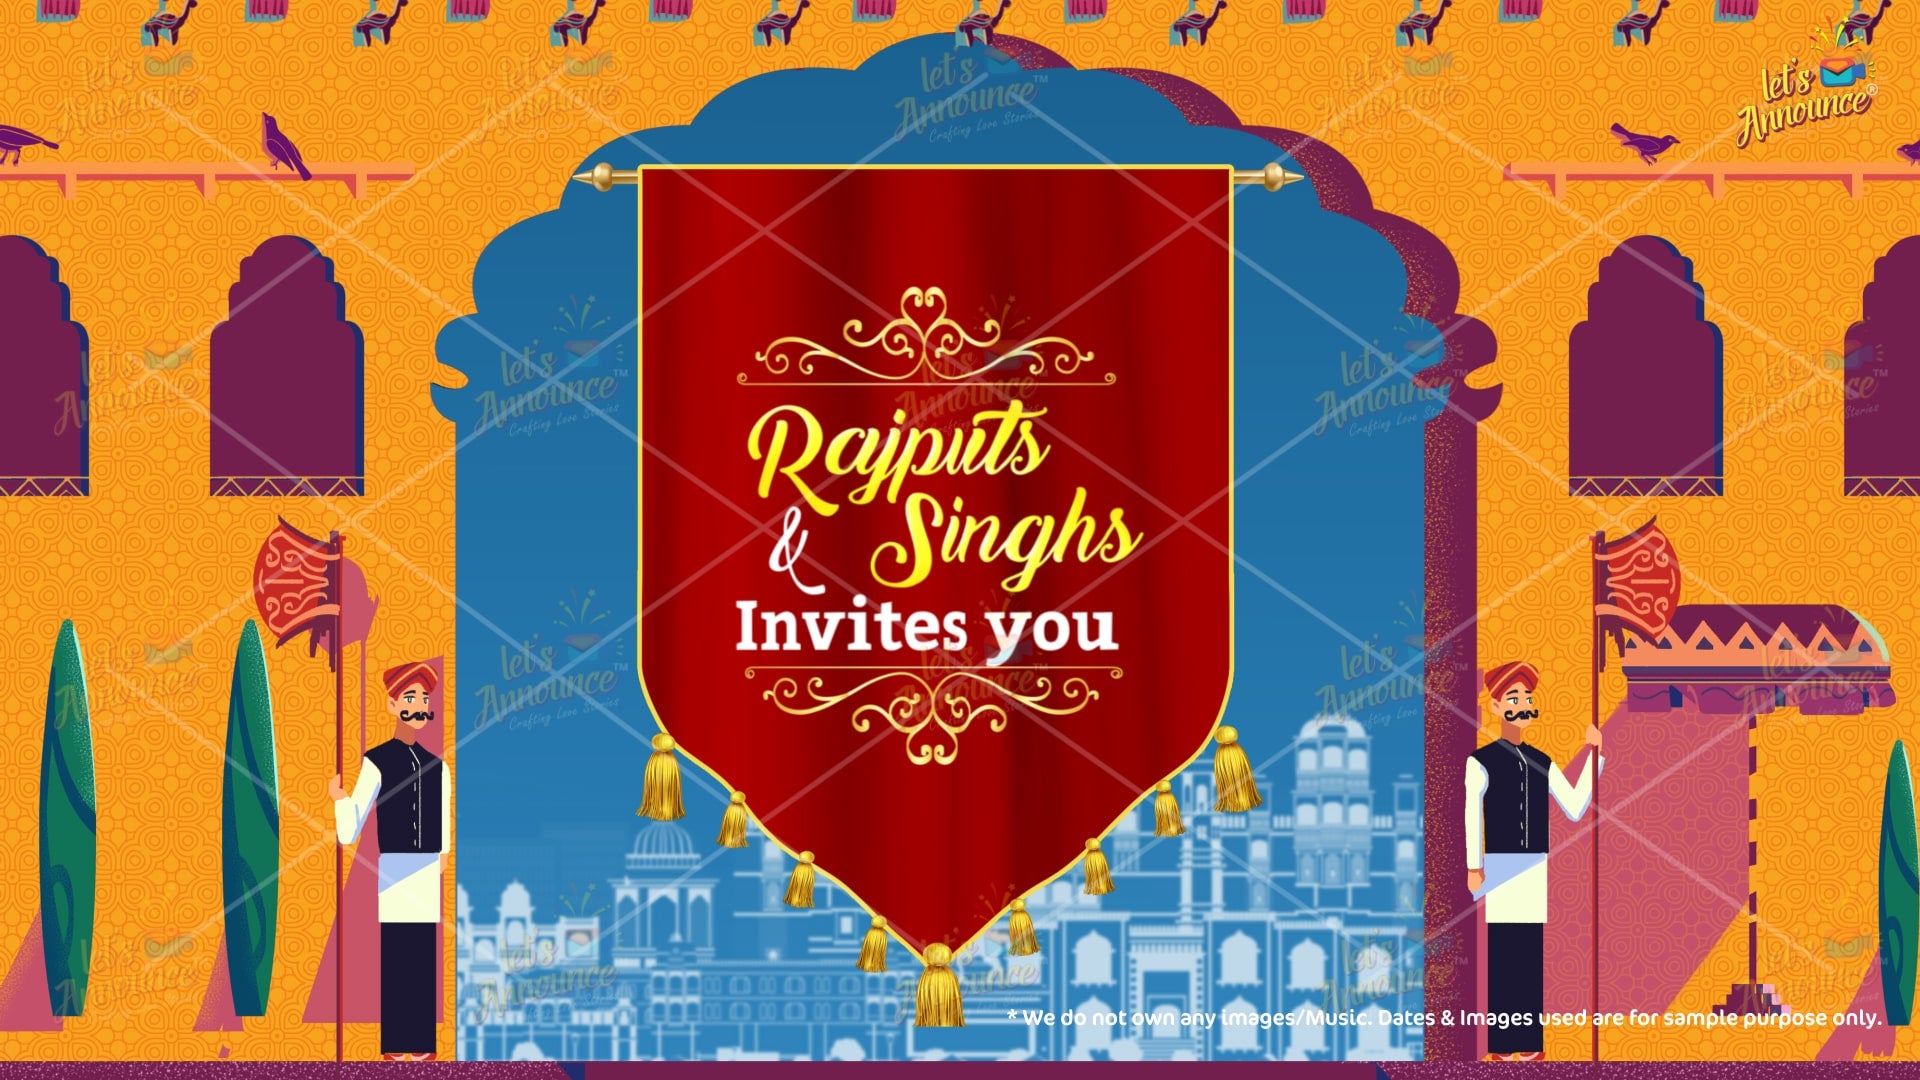 Rajasthani wedding invite -95 sec (USD 100$)